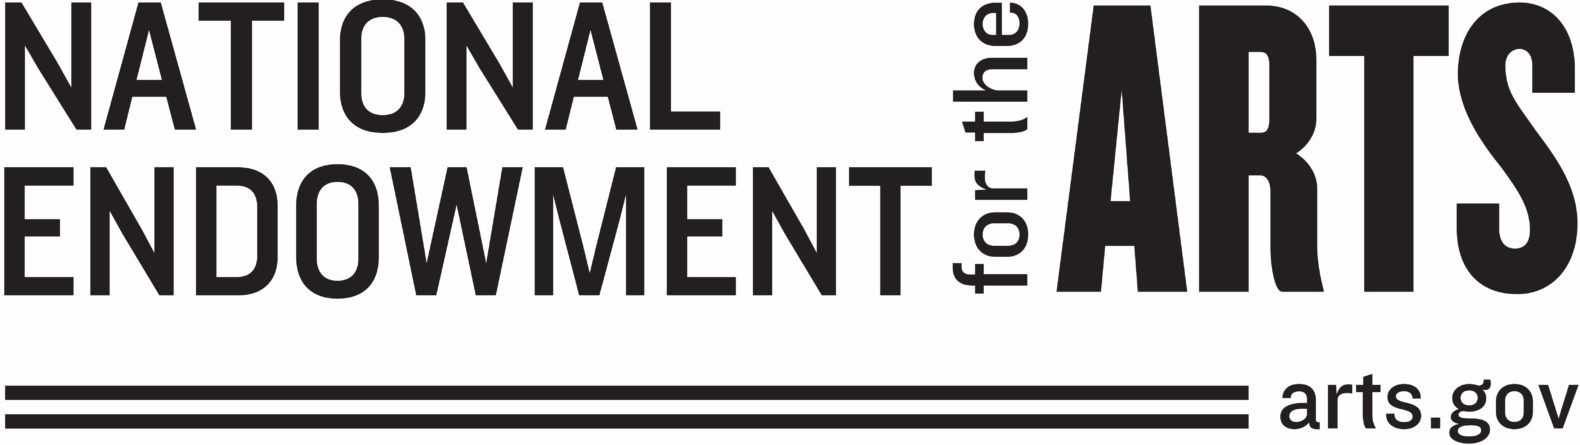 National Endowment for the Arts logo NEA